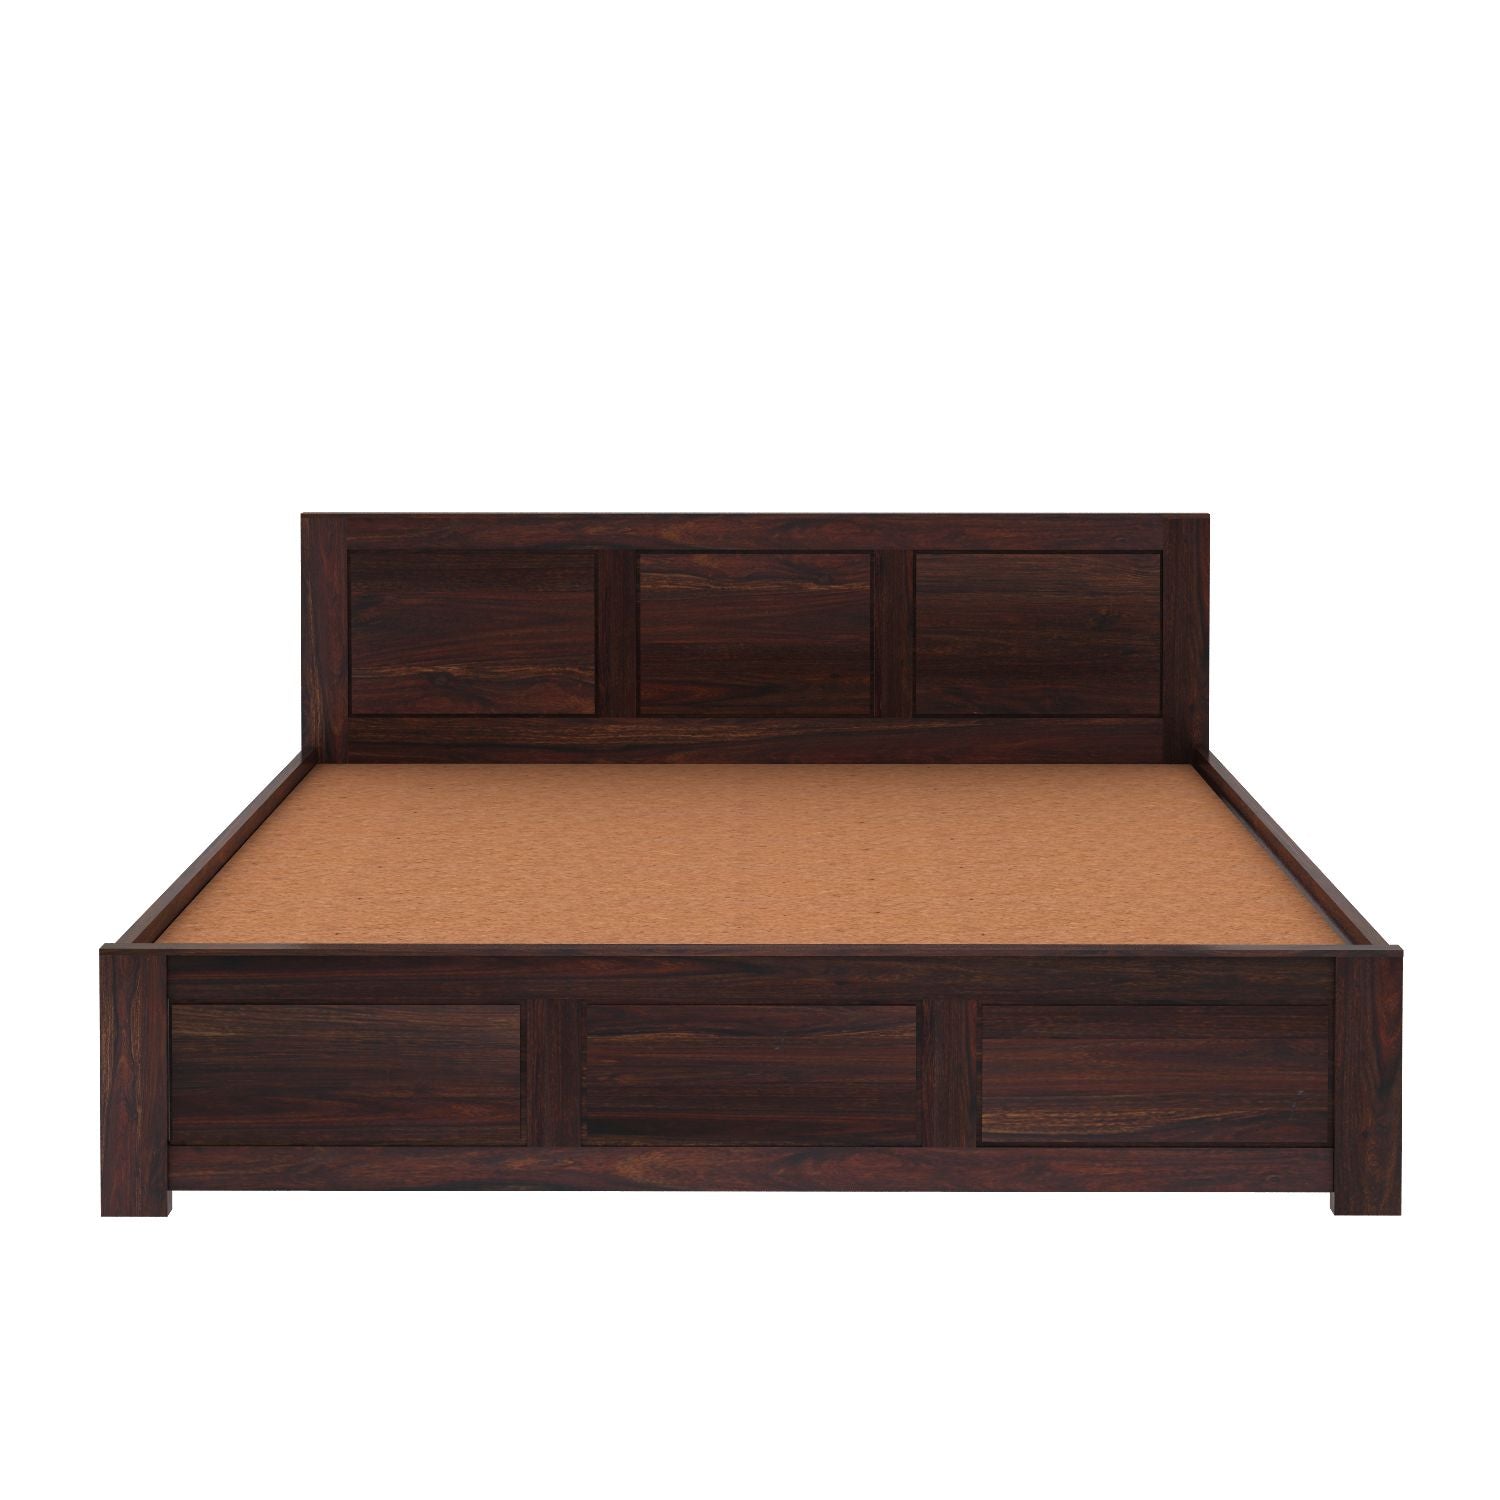 Woodwing Solid Sheesham Wood Bed Without Storage (King Size, Walnut Finish)